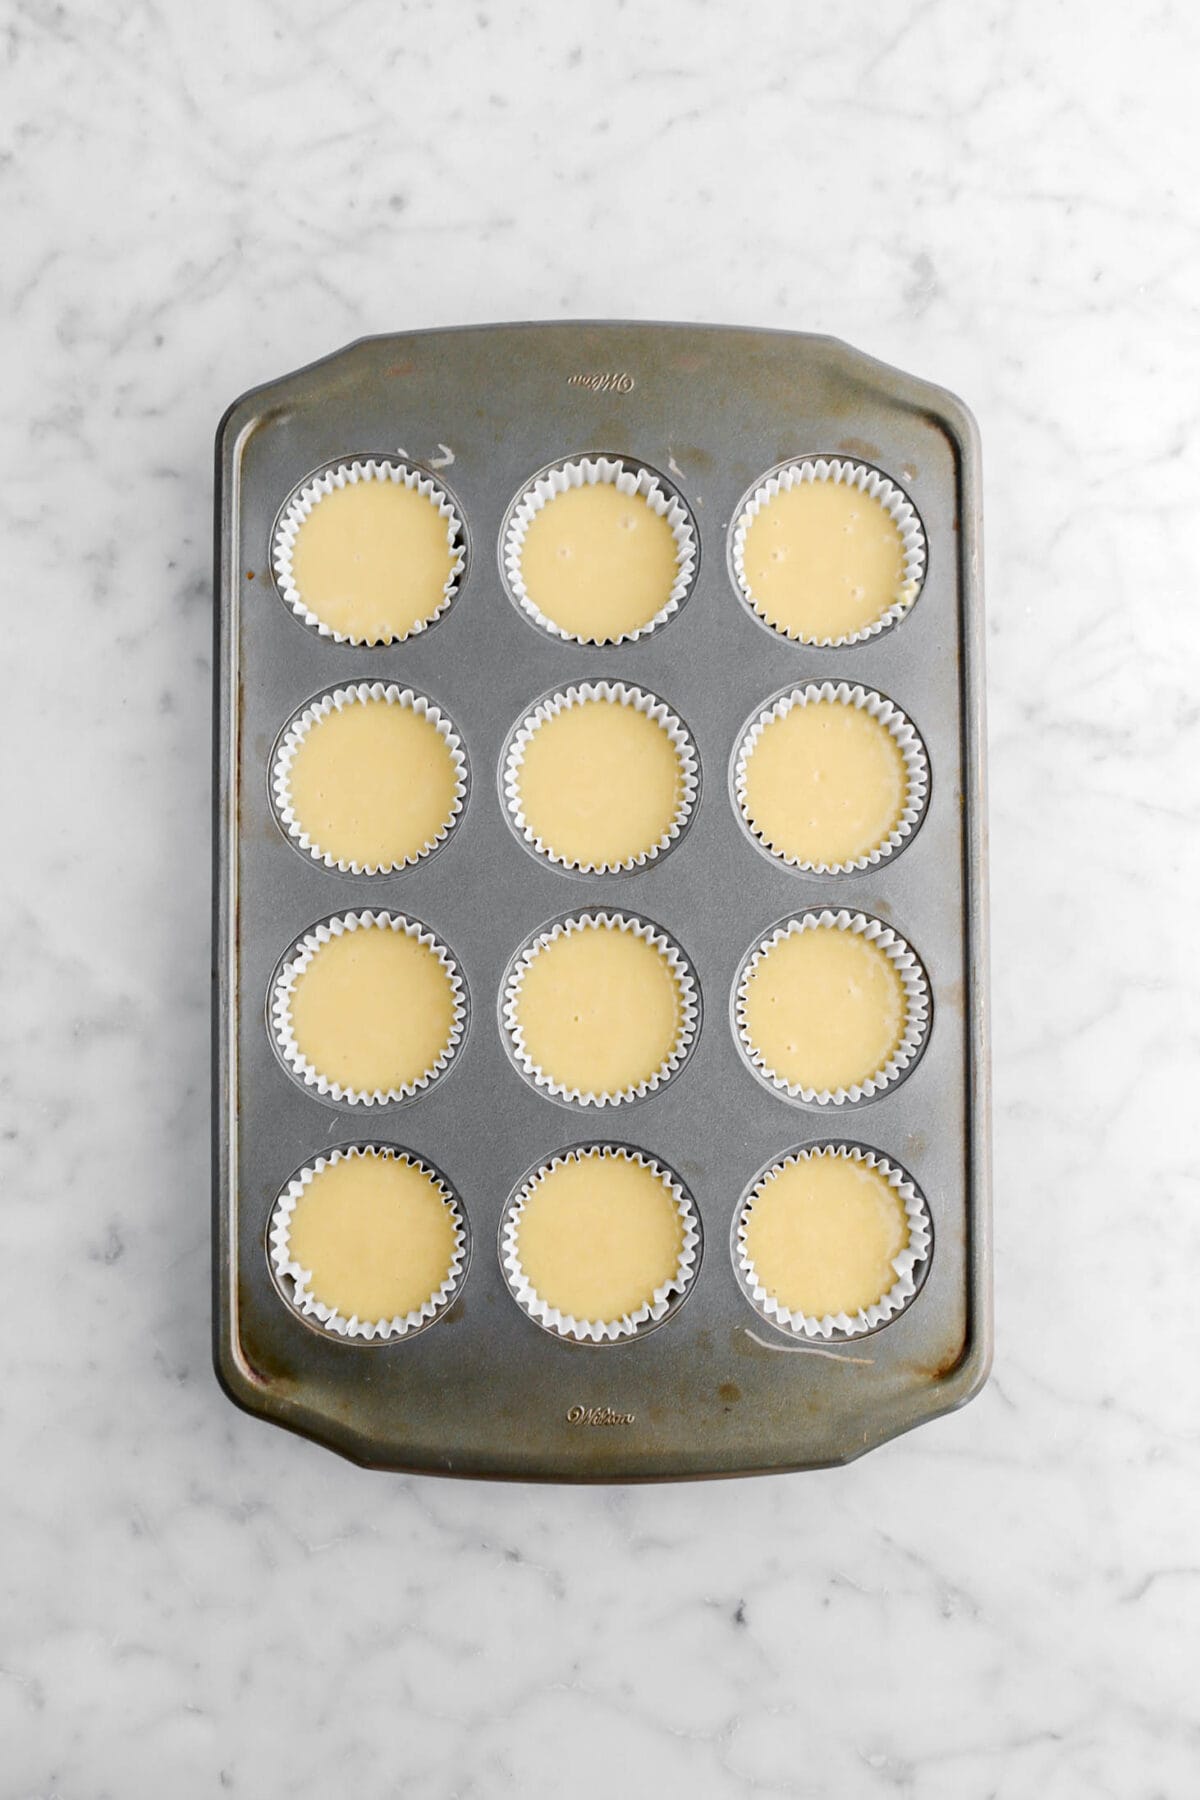 cake batter in lined cupcake pan.